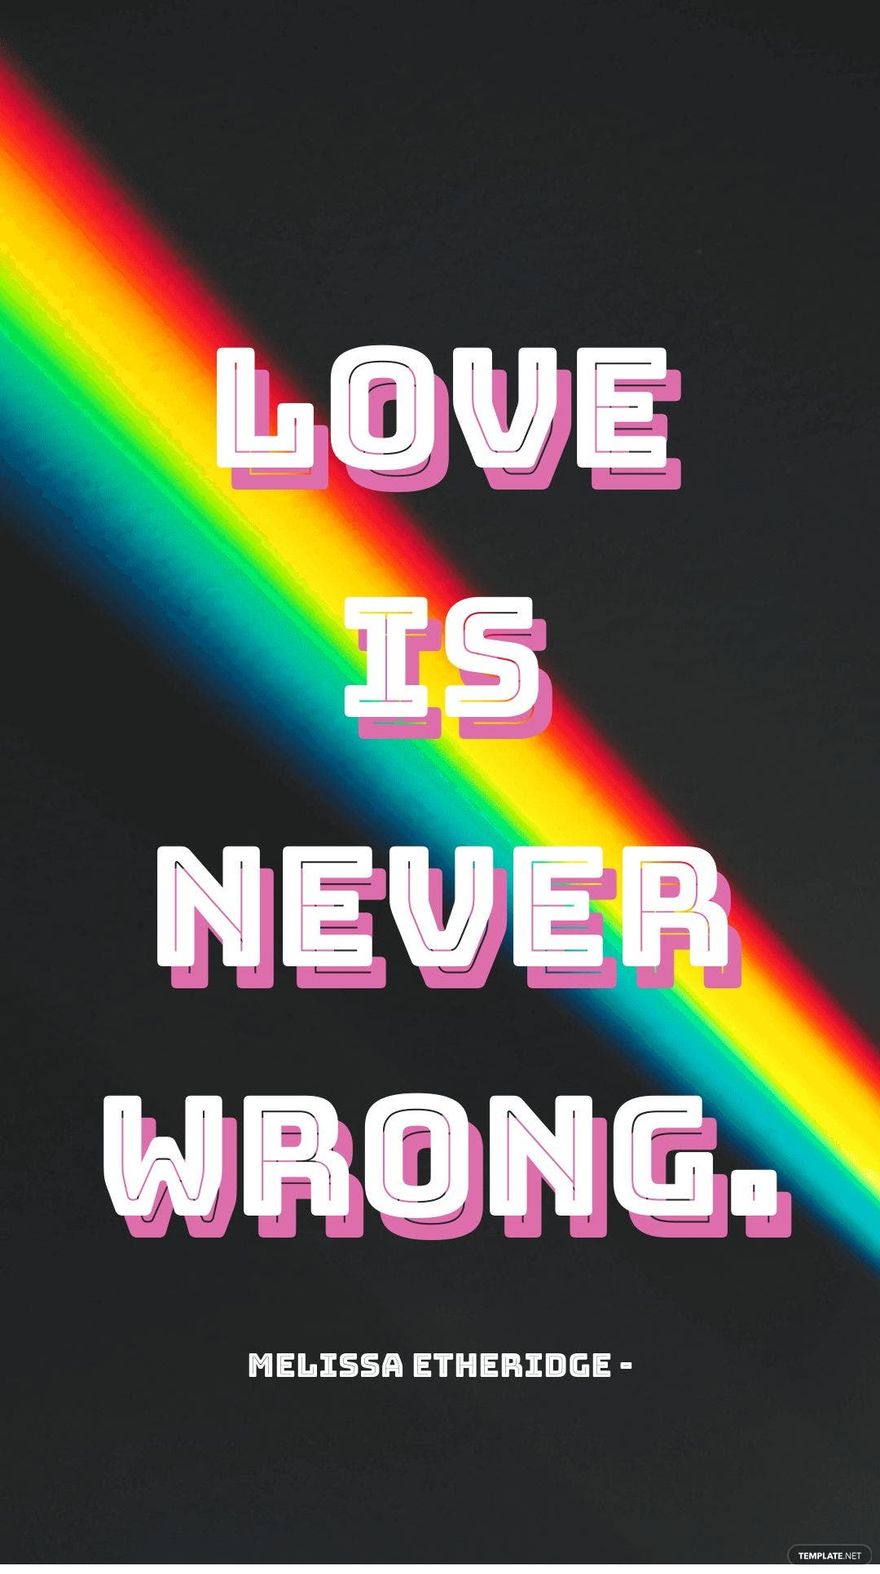 Free Melissa Etheridge - Love is never wrong. in JPG